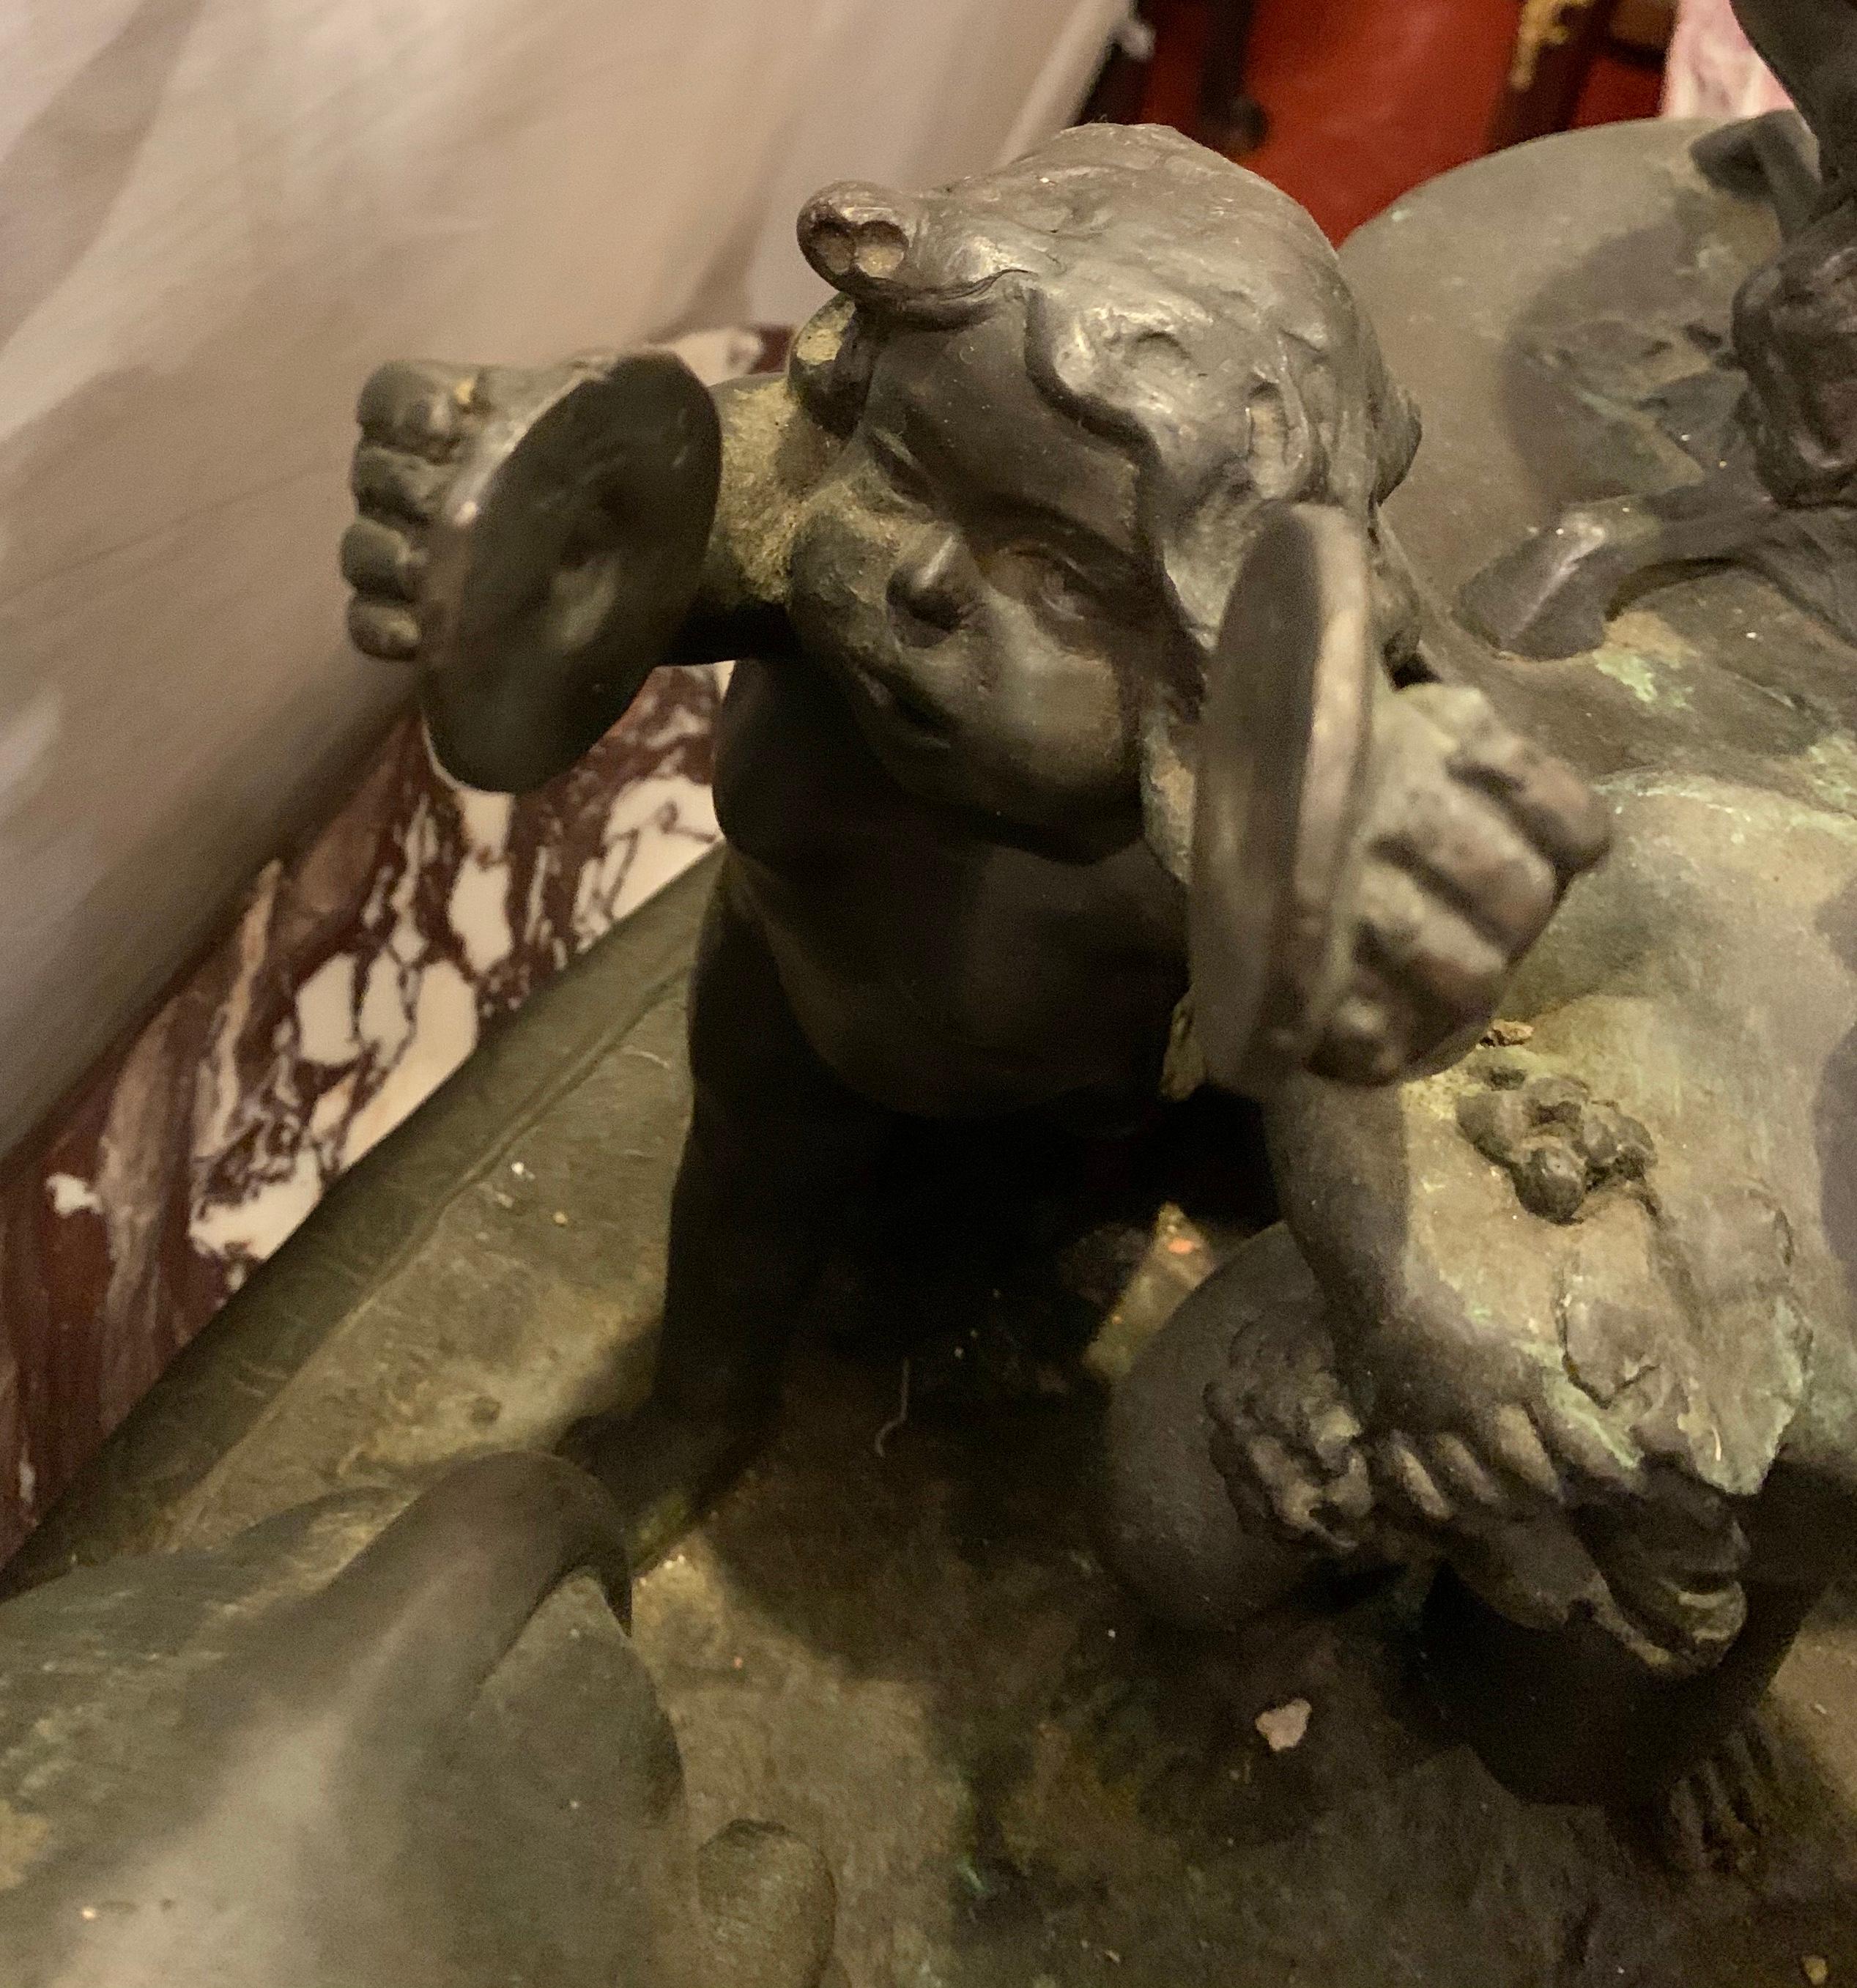 Antique Bronze Cherub Group Sculpture or Centerpiece of Drunken Playing Cherubs 4